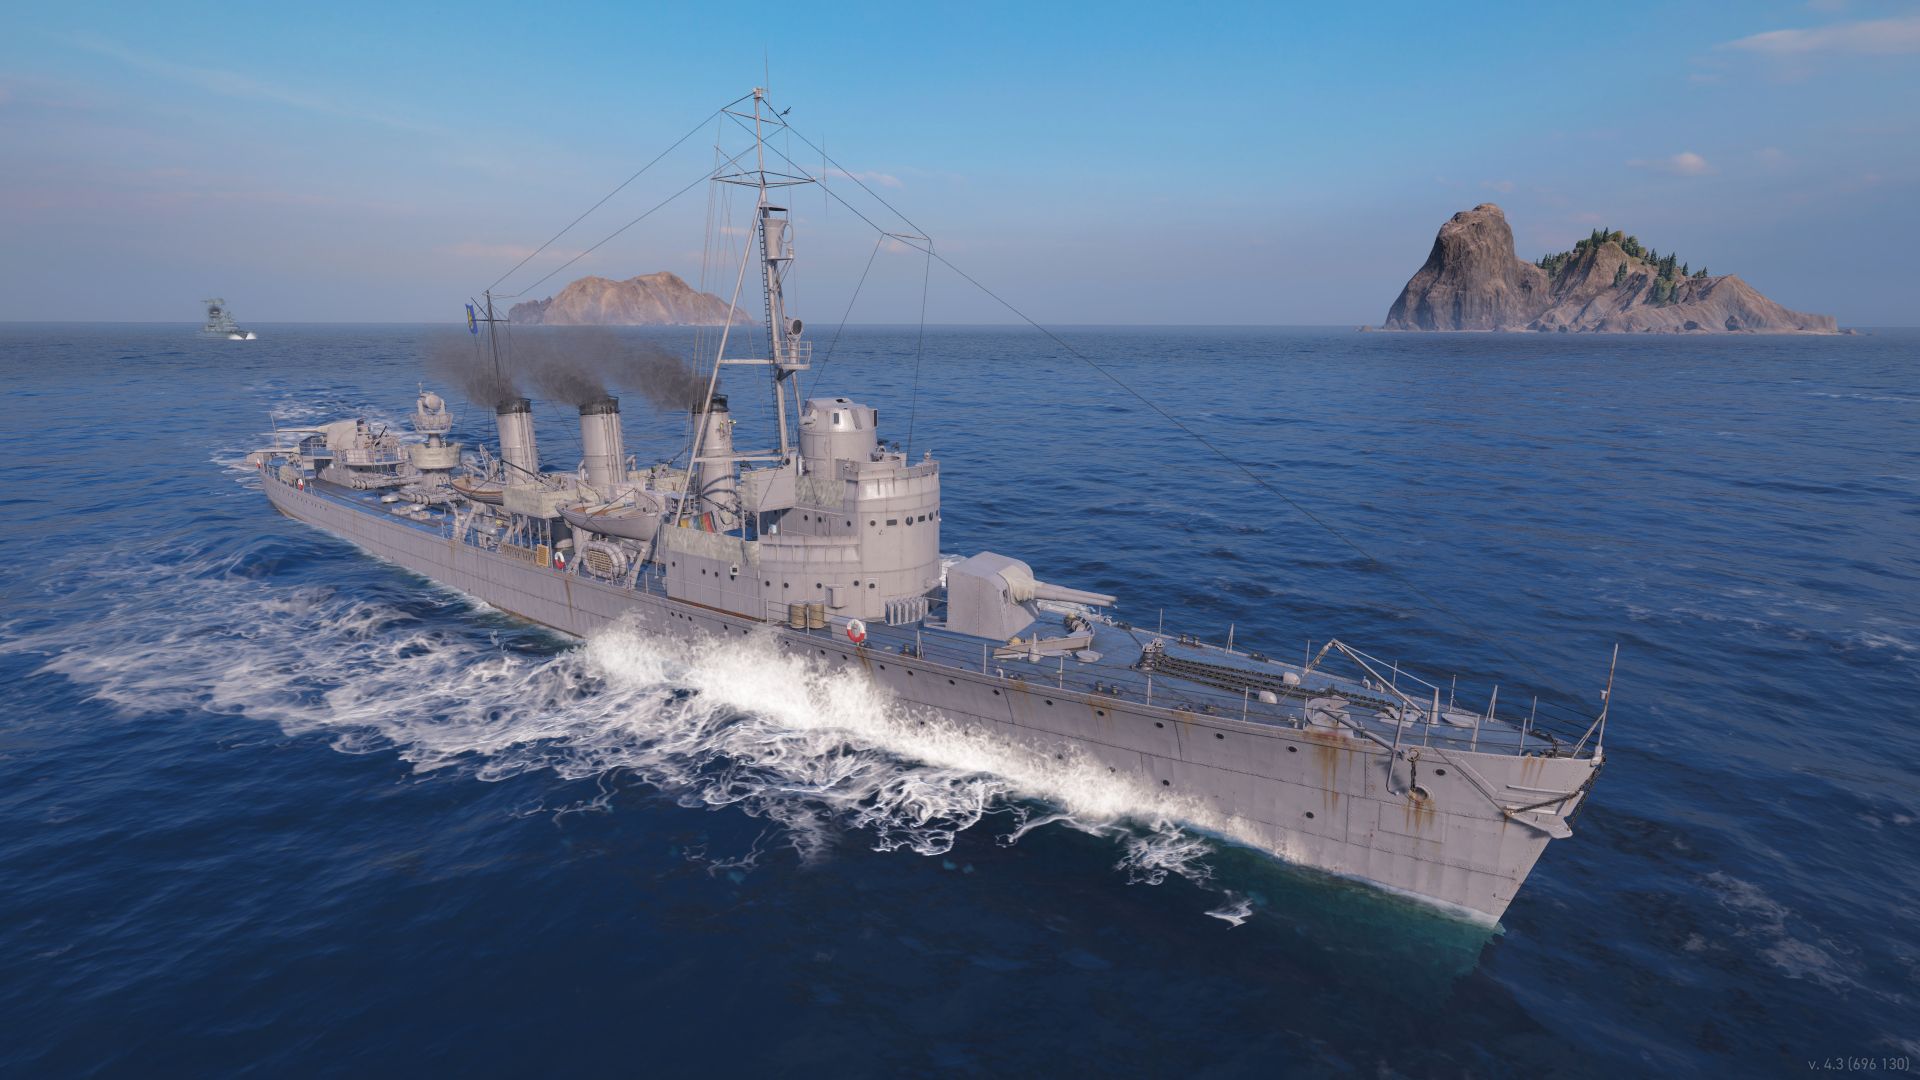 World Of Warships: Legends Reveals Spring 2023 Update